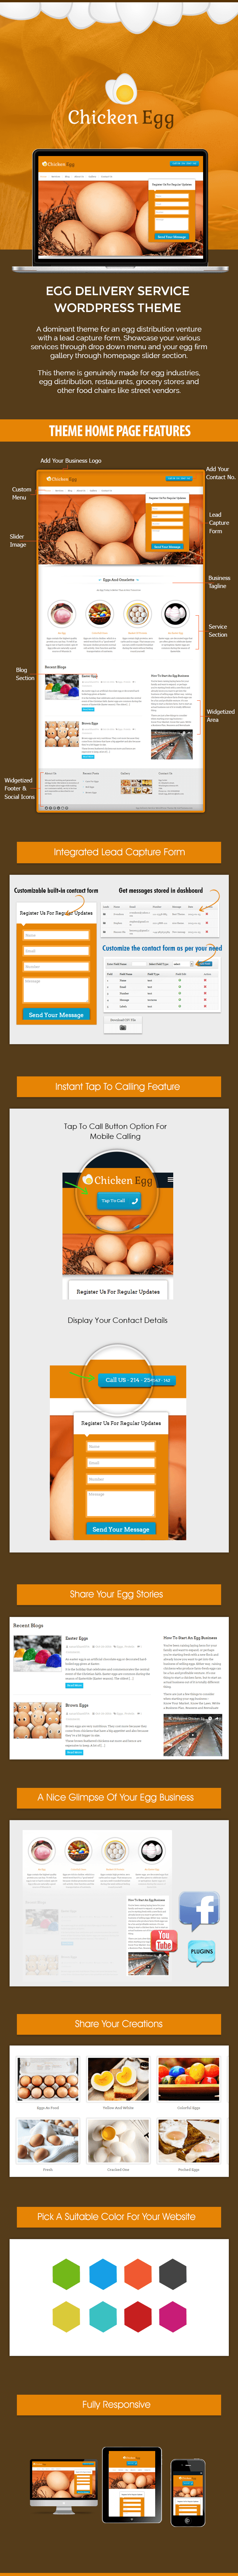 Egg Form Logo - ChickenEgg Egg Delivery Service WordPress Theme